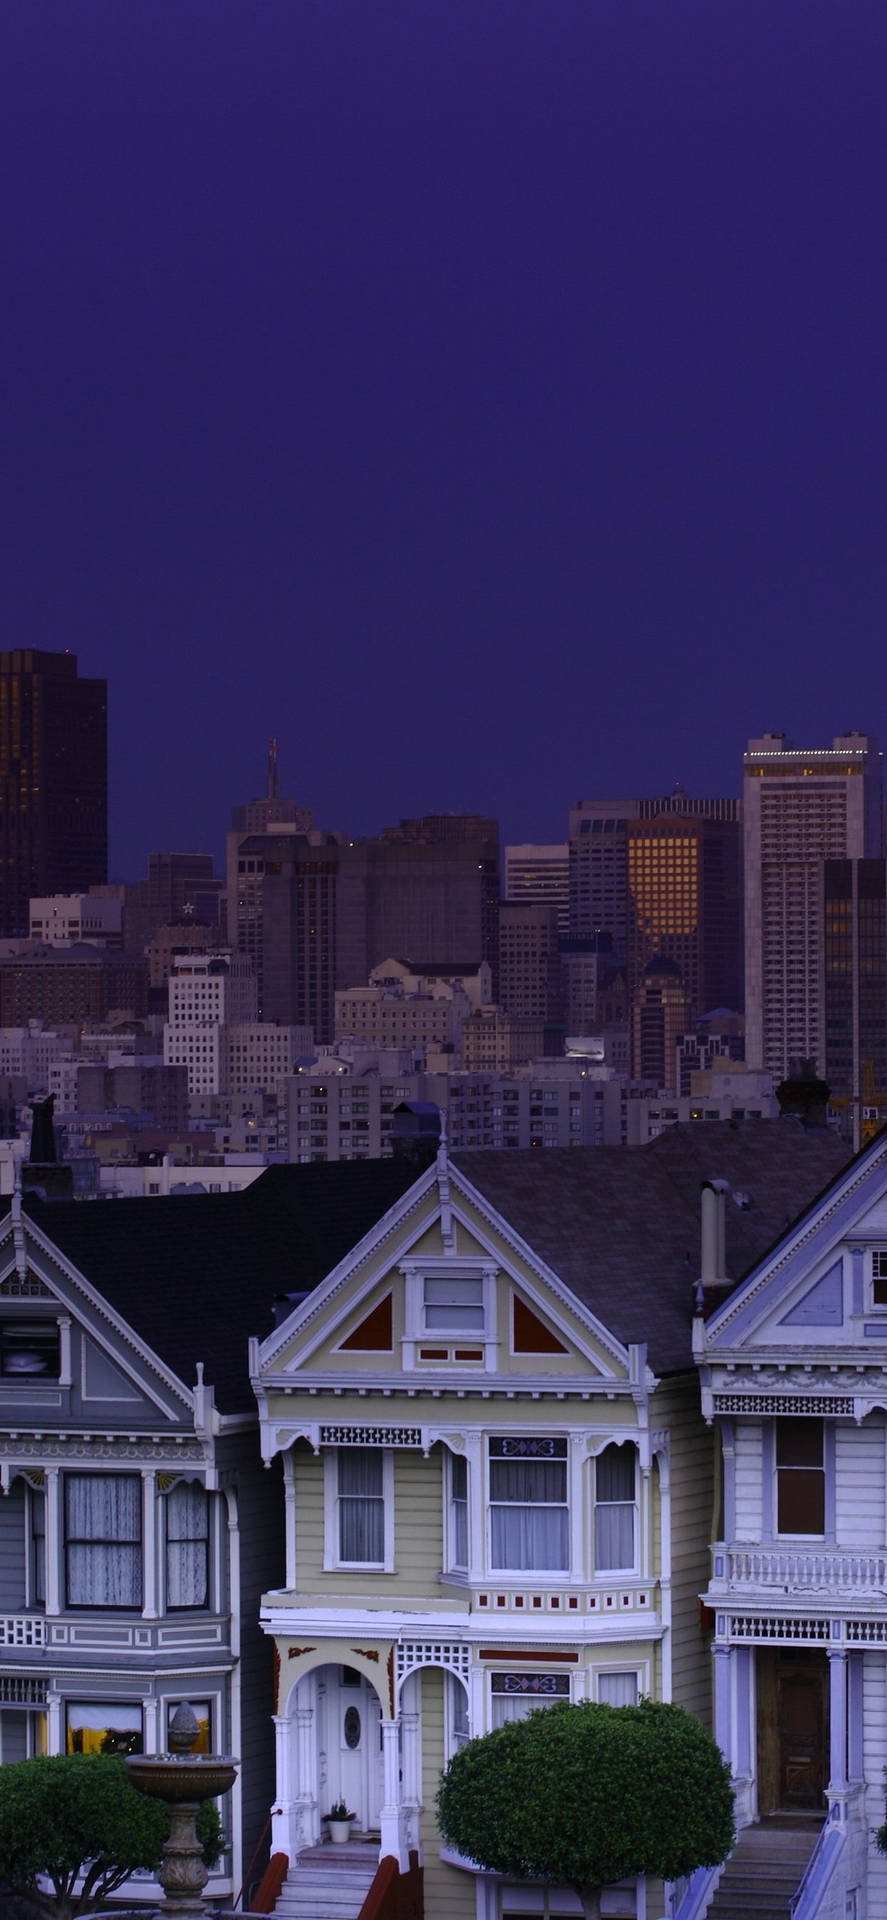 San Francisco Phone Homes Vs. City Buildings Wallpaper